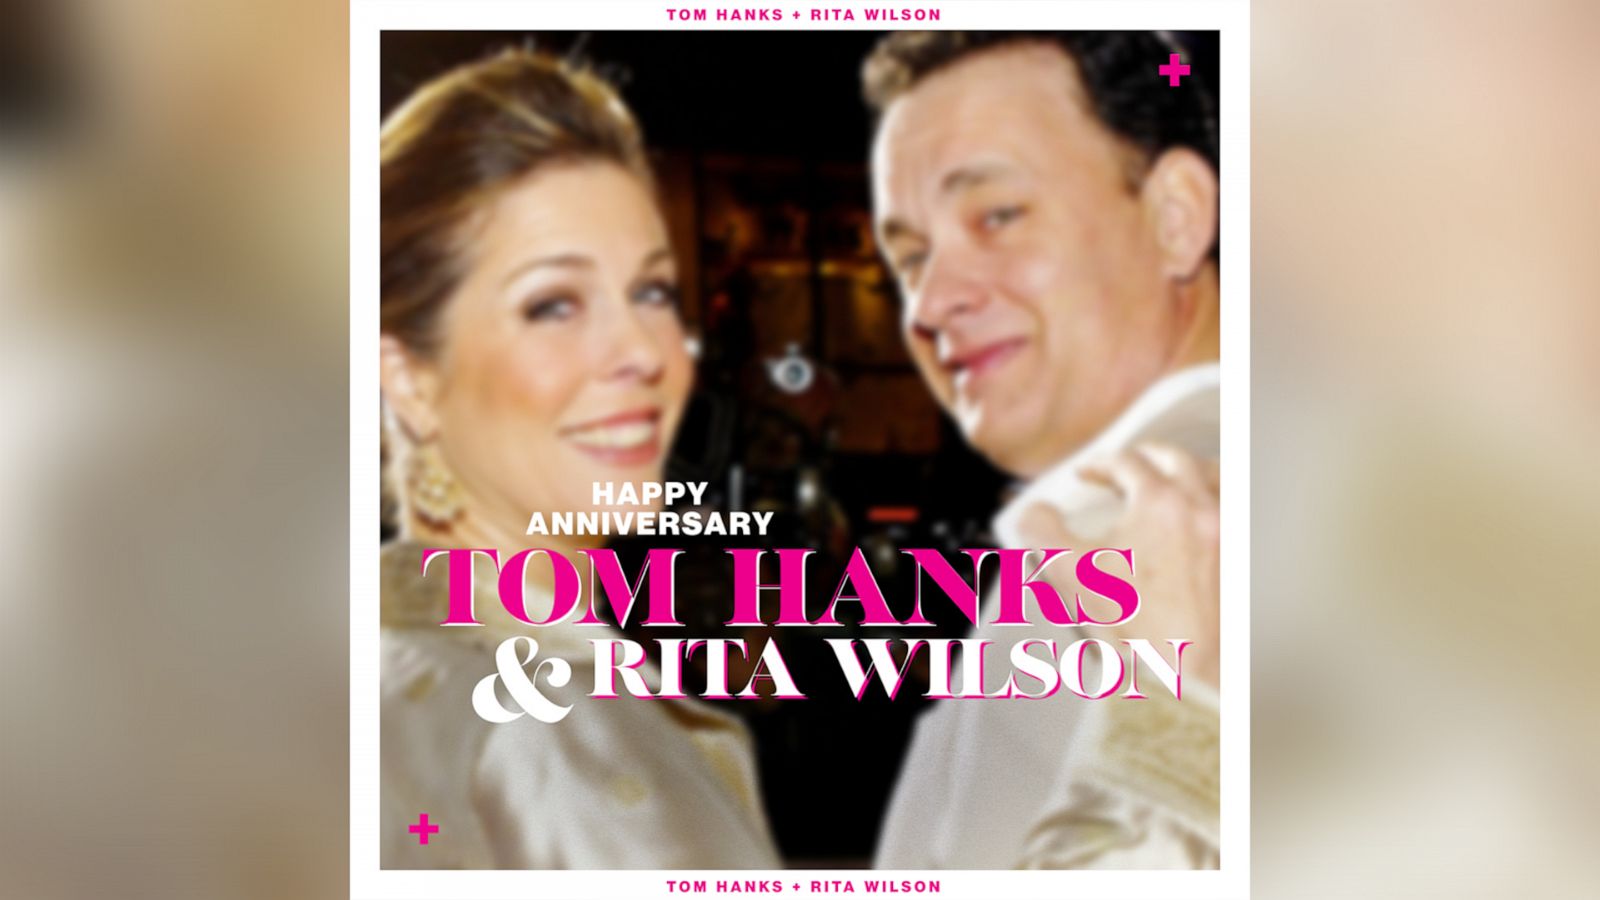 Rita Wilson and Tom Hanks Celebrate 33rd Wedding Anniversary